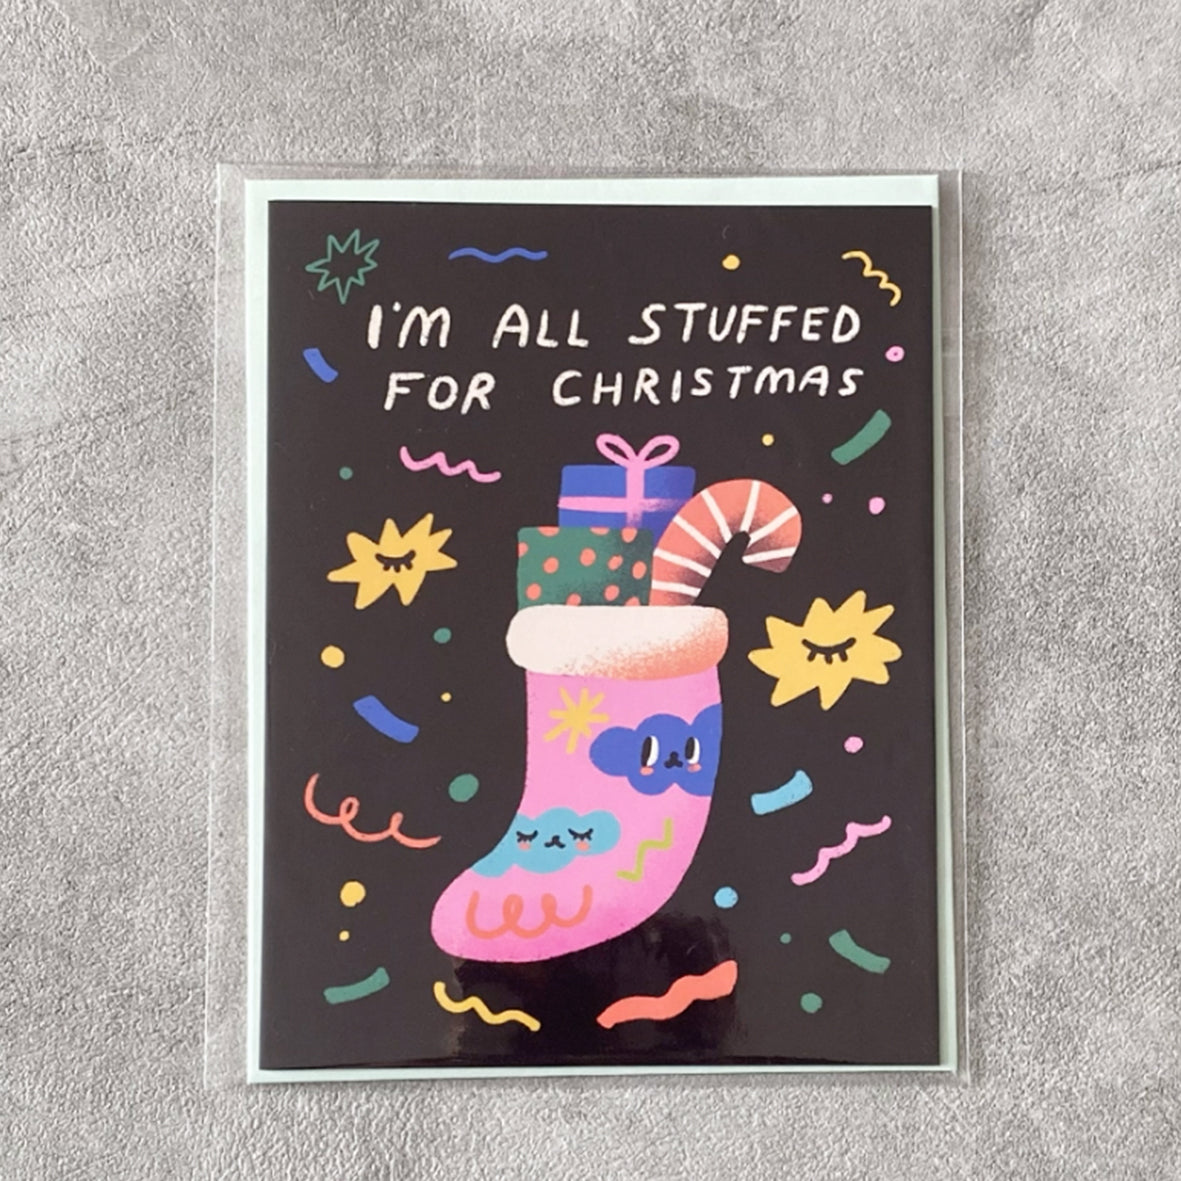 Liunic on Things Christmas Card